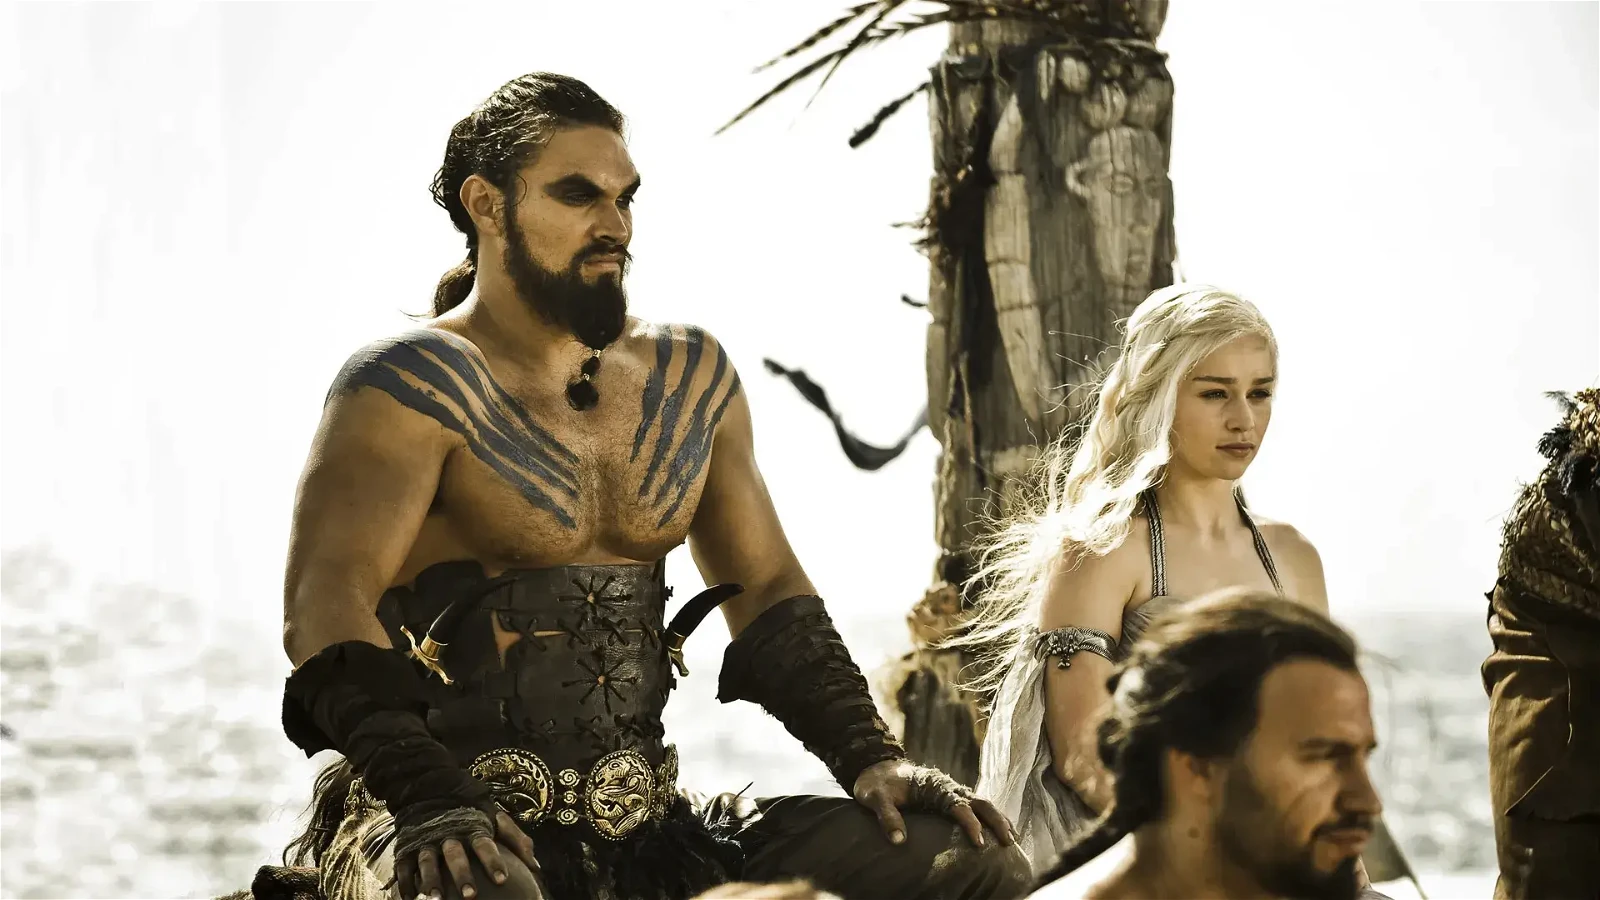 Khal Drogo and Daenerys Targaryen